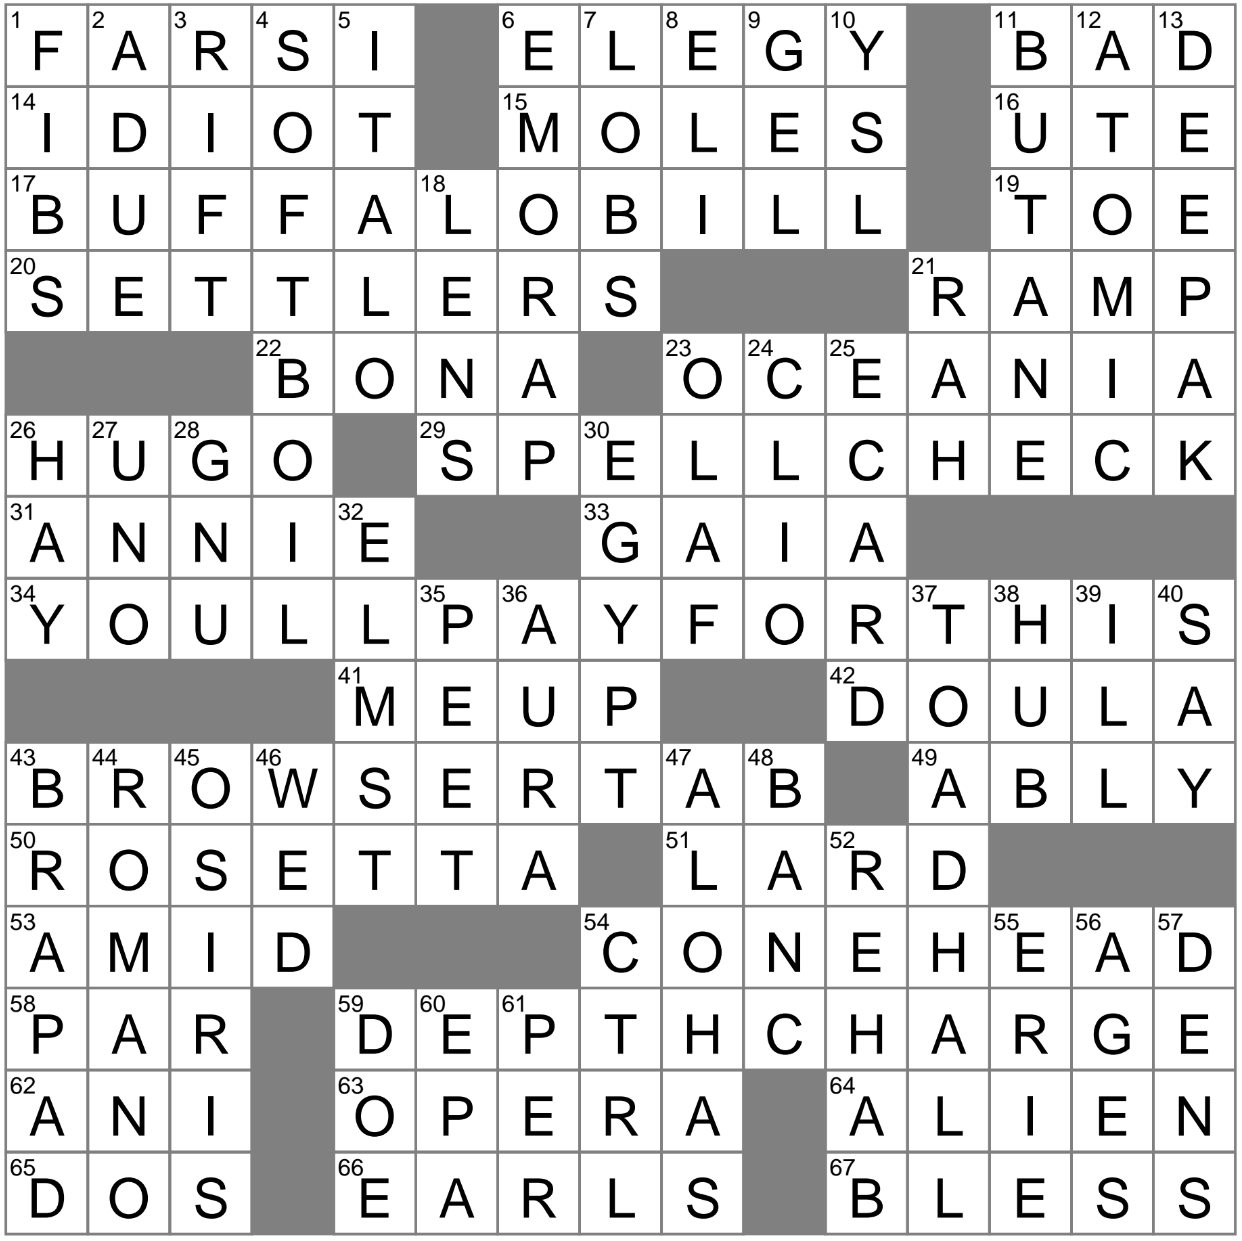 LA Times Crossword 15 Aug 23 Tuesday LAXCrossword com